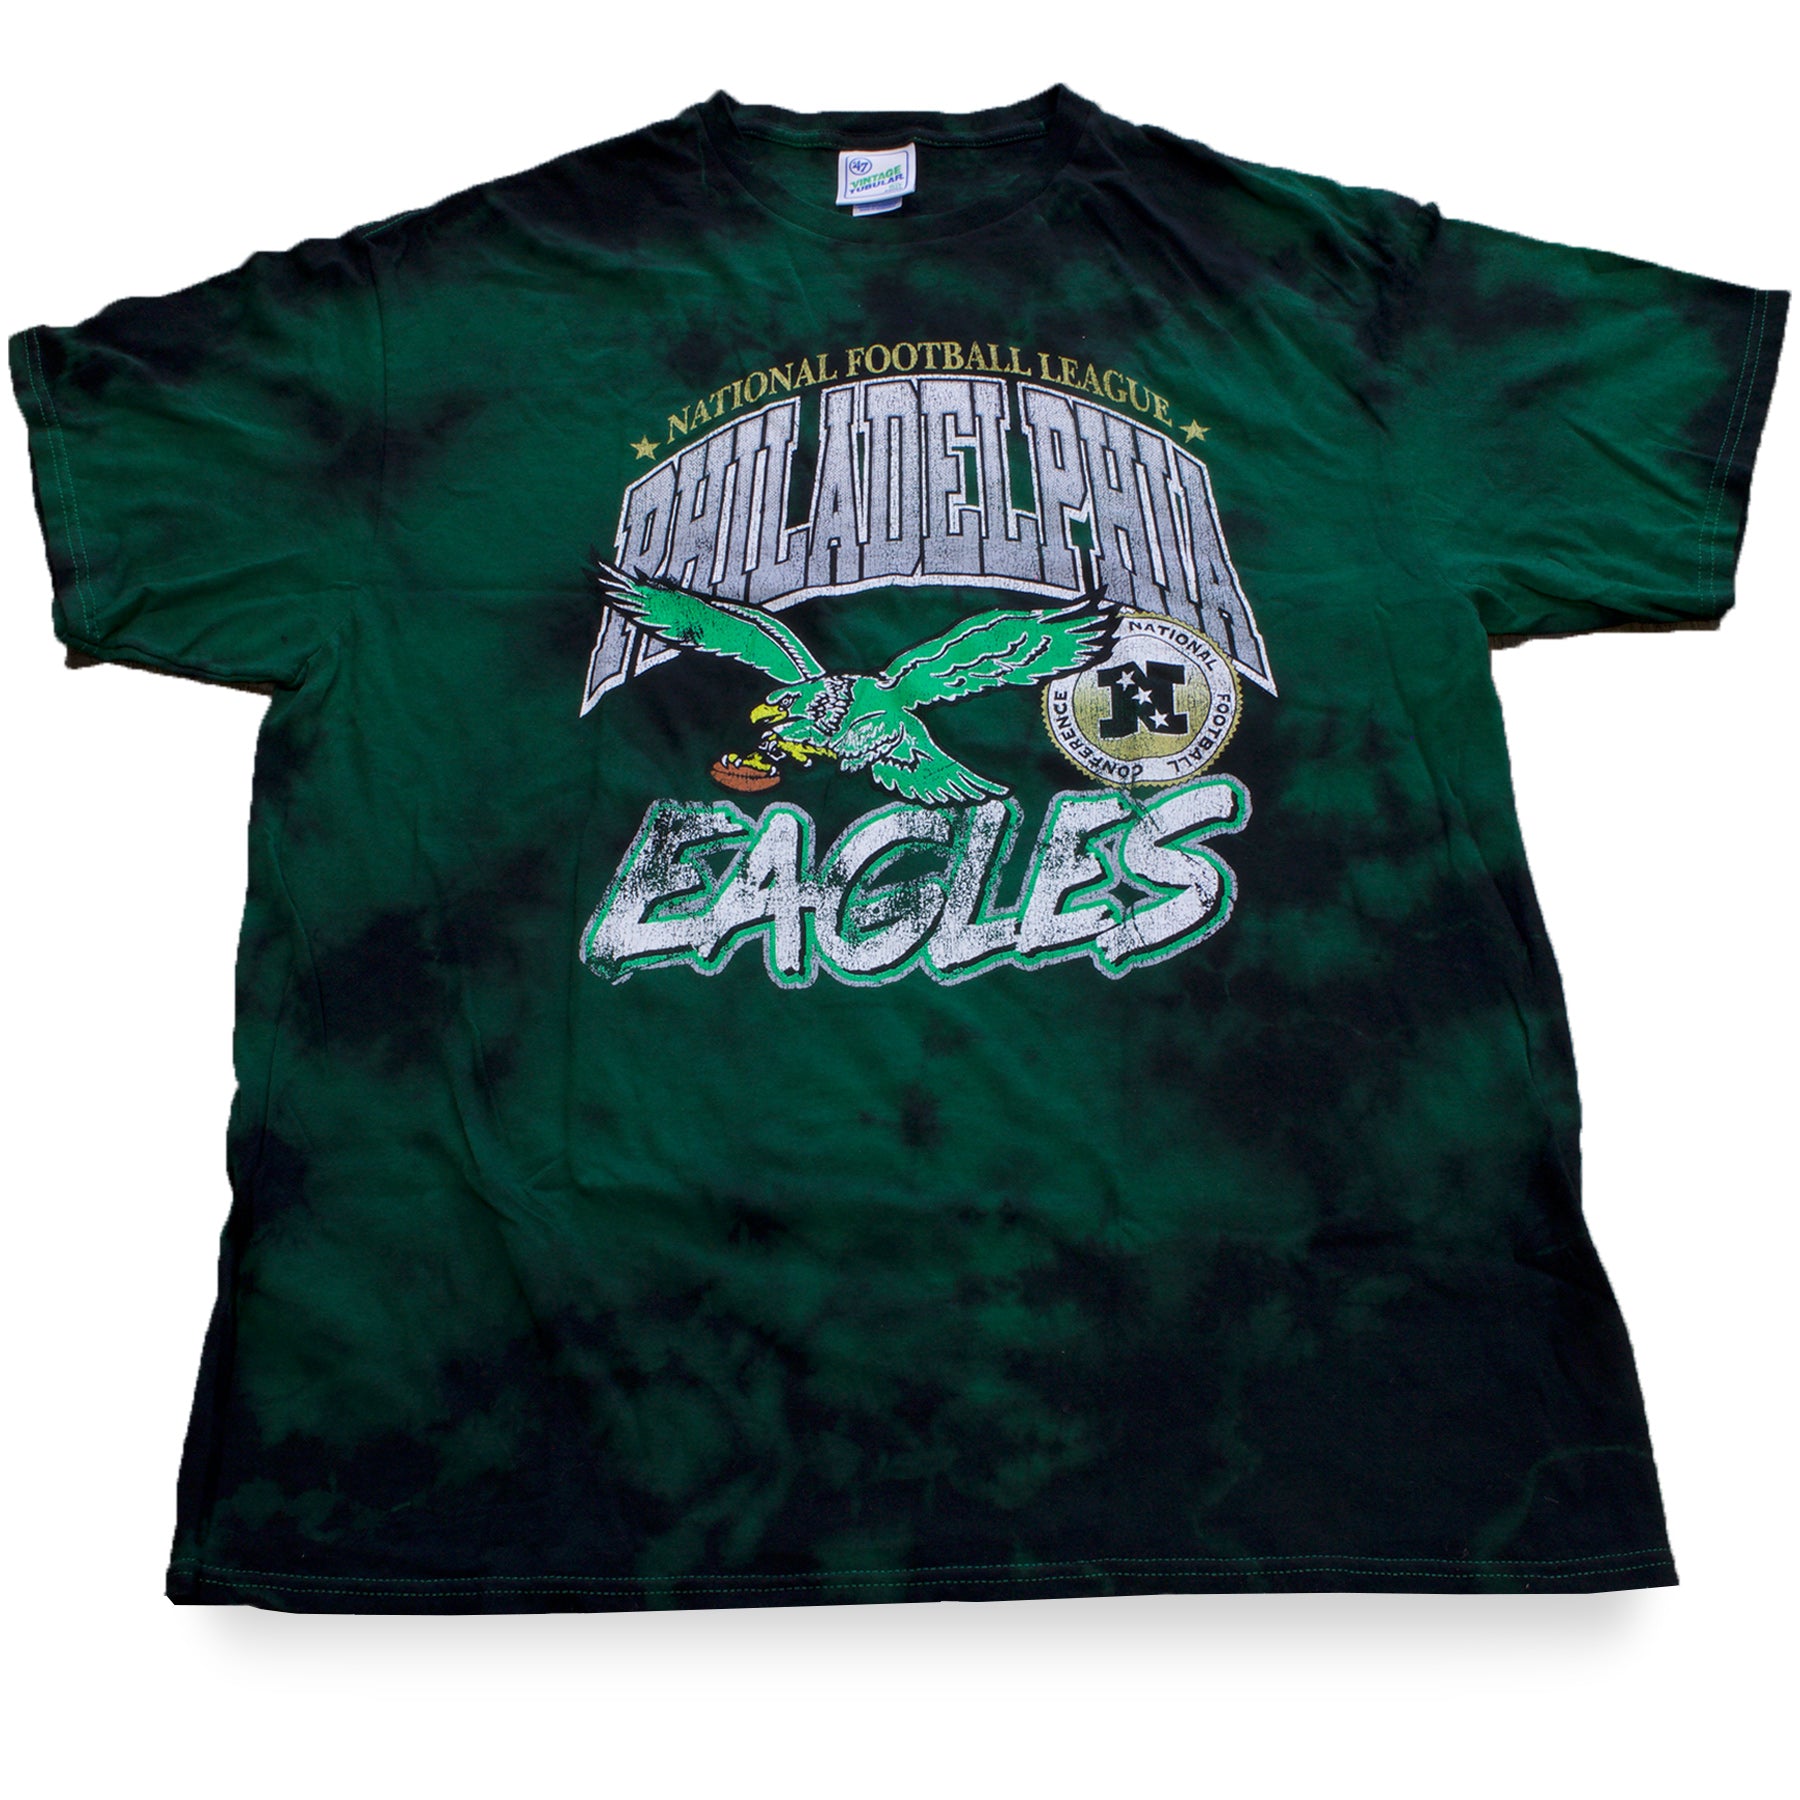 retro philadelphia eagles shirt